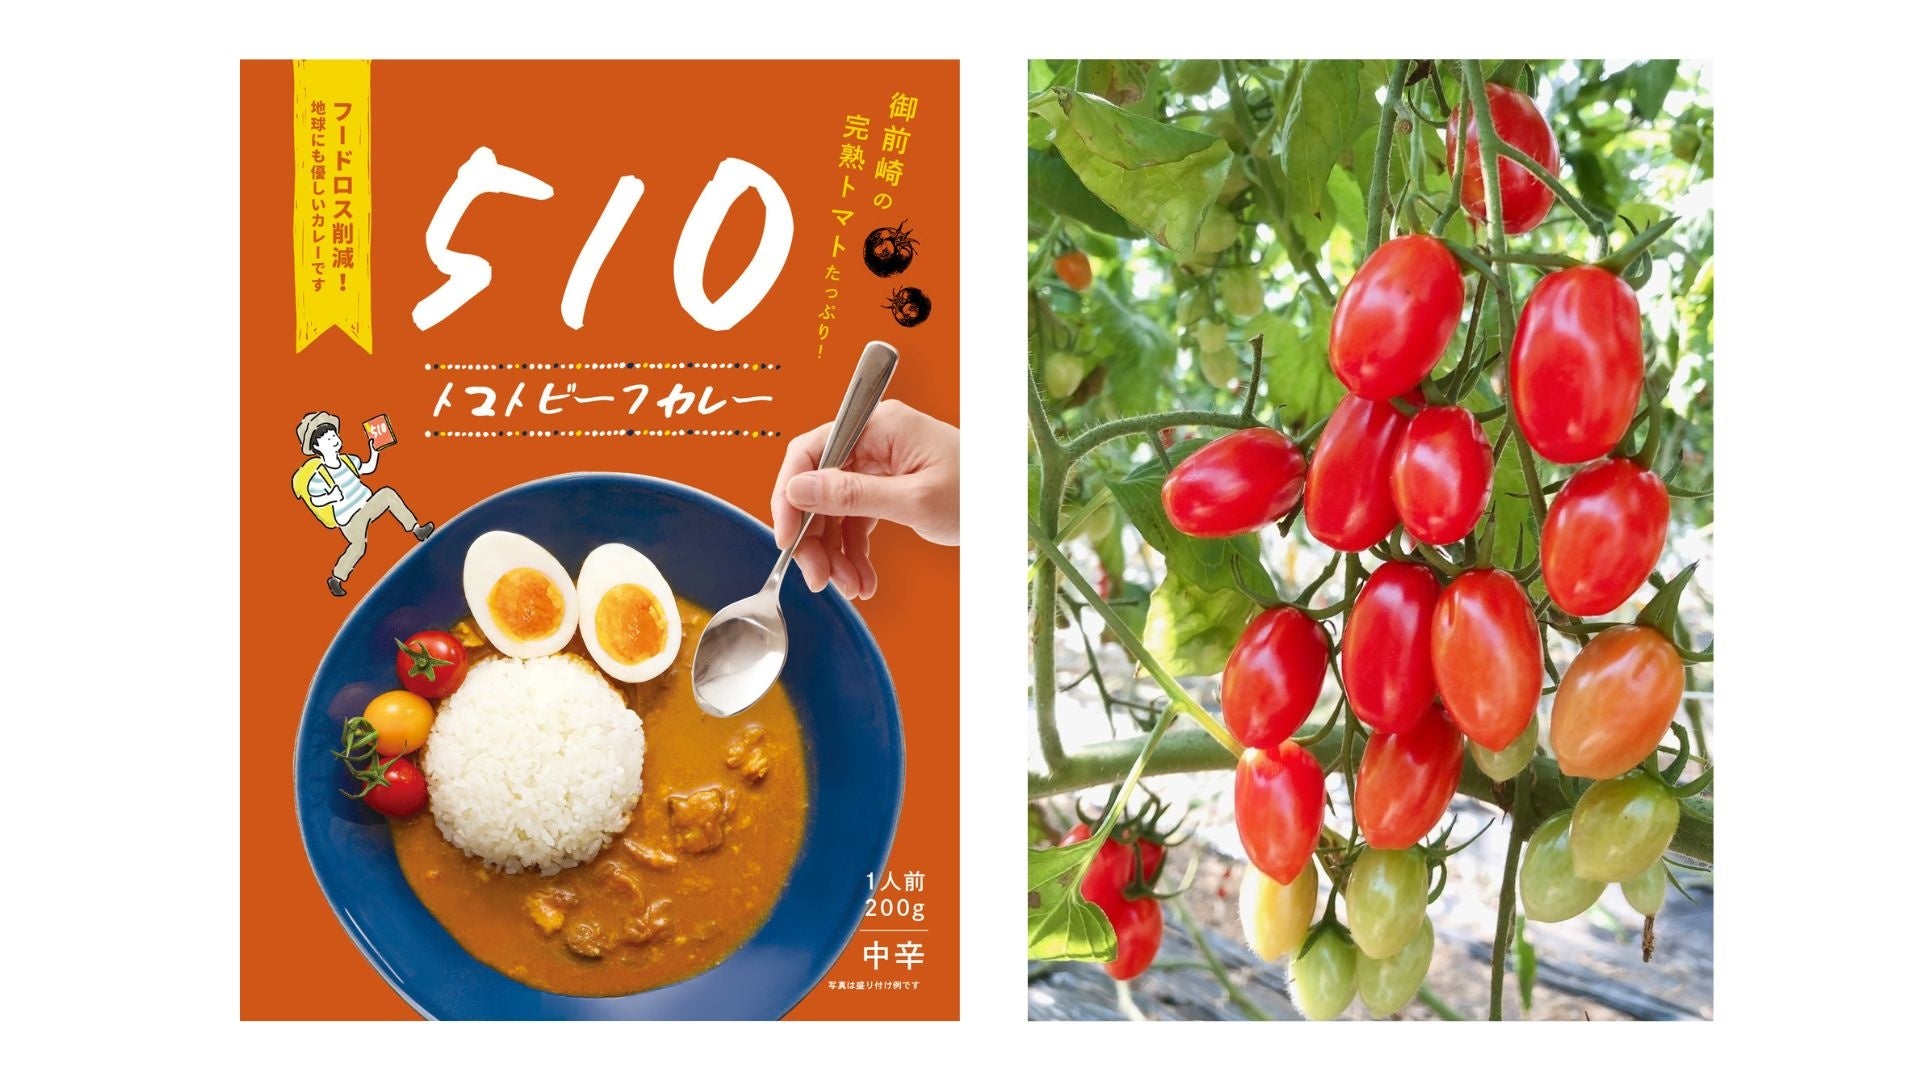 MOTTAINAI BATON、レトルトカレーでフードロスを削減  静岡県の後藤農園が栽培した規格外のミニトマト約3000個を使用したレトルトカレーを7月7日より発売中のサブ画像1